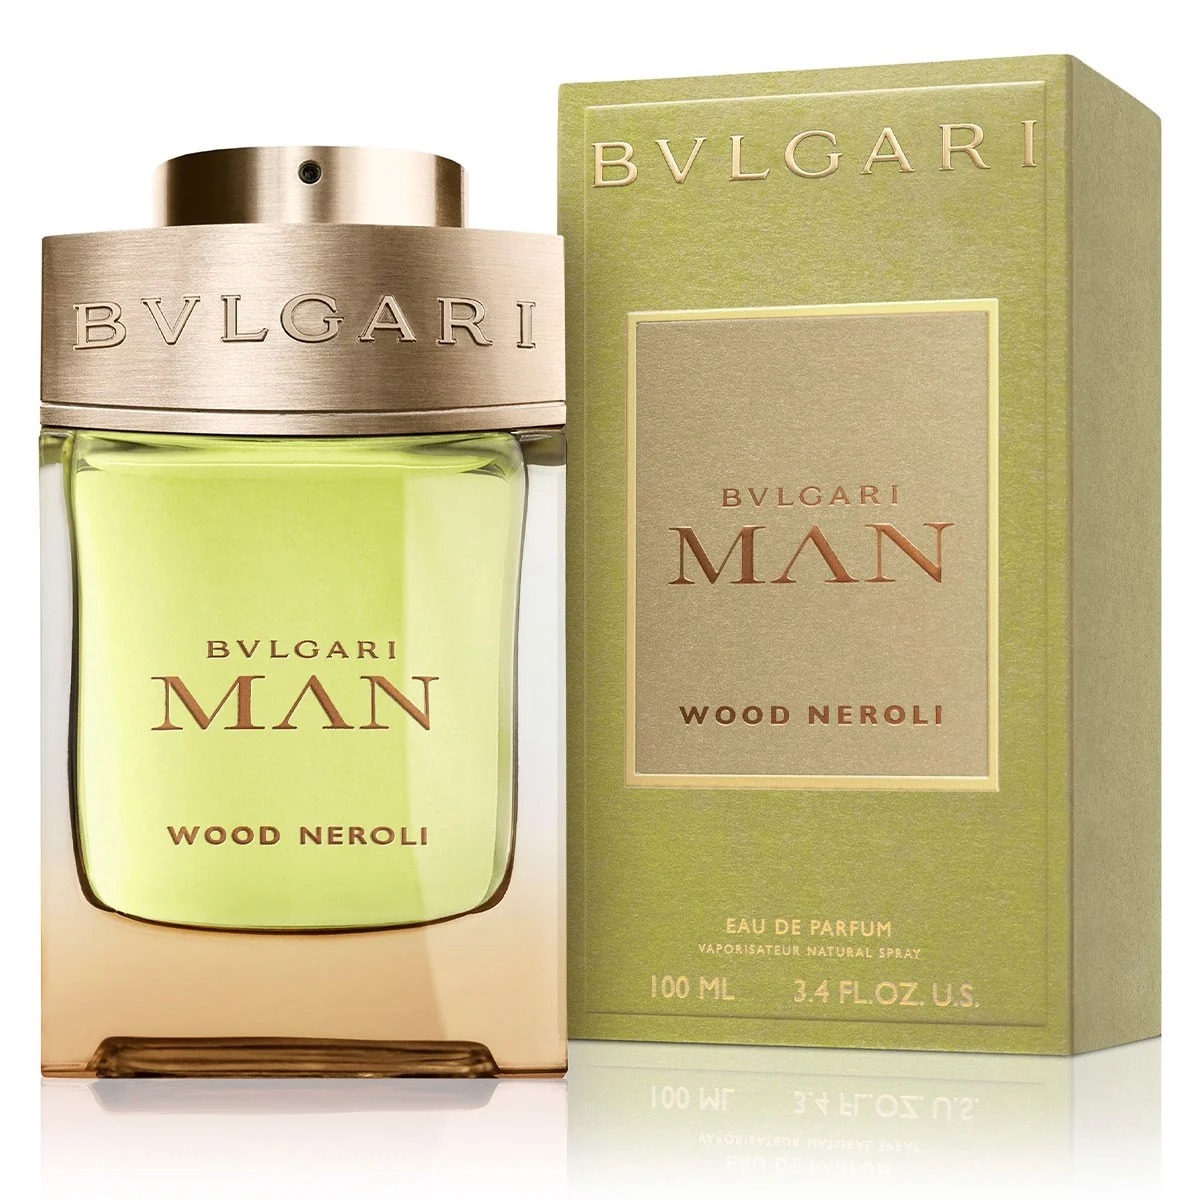 Bvlgari Man Wood Neroli eau de parfum